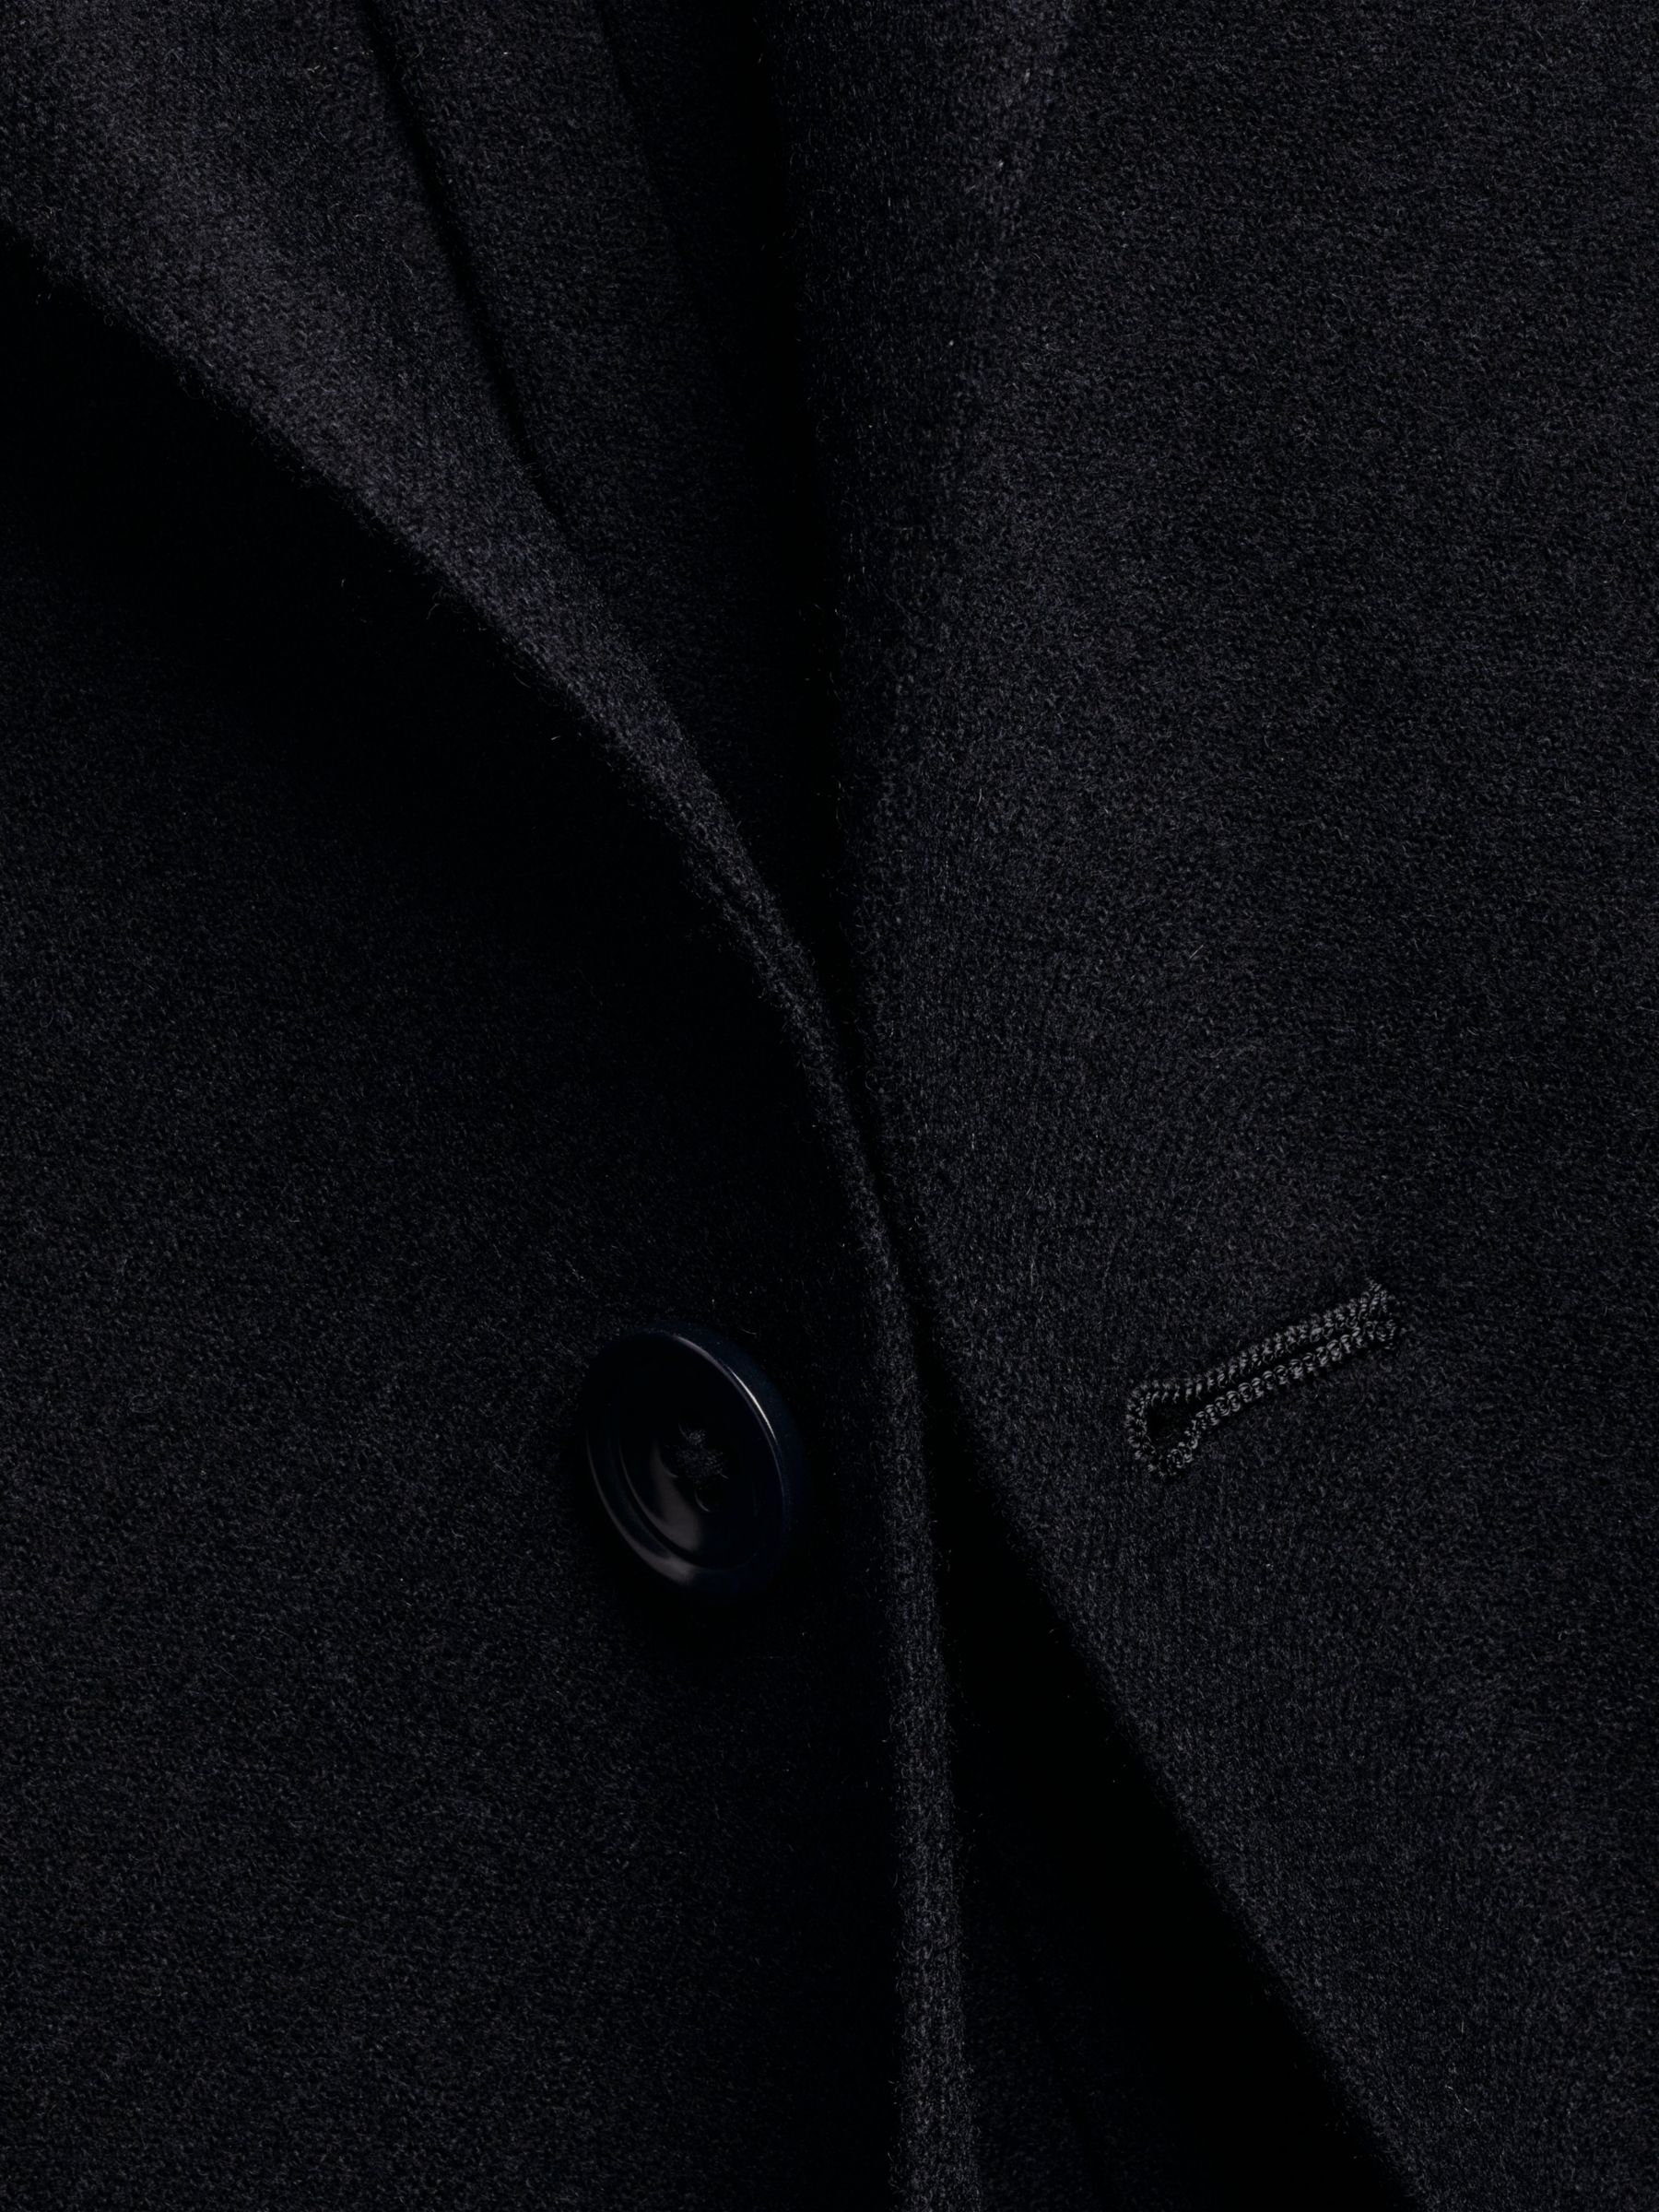 Charles Tyrwhitt Twill Wool Unstructured Slim Fit Jacket, Navy, 42R